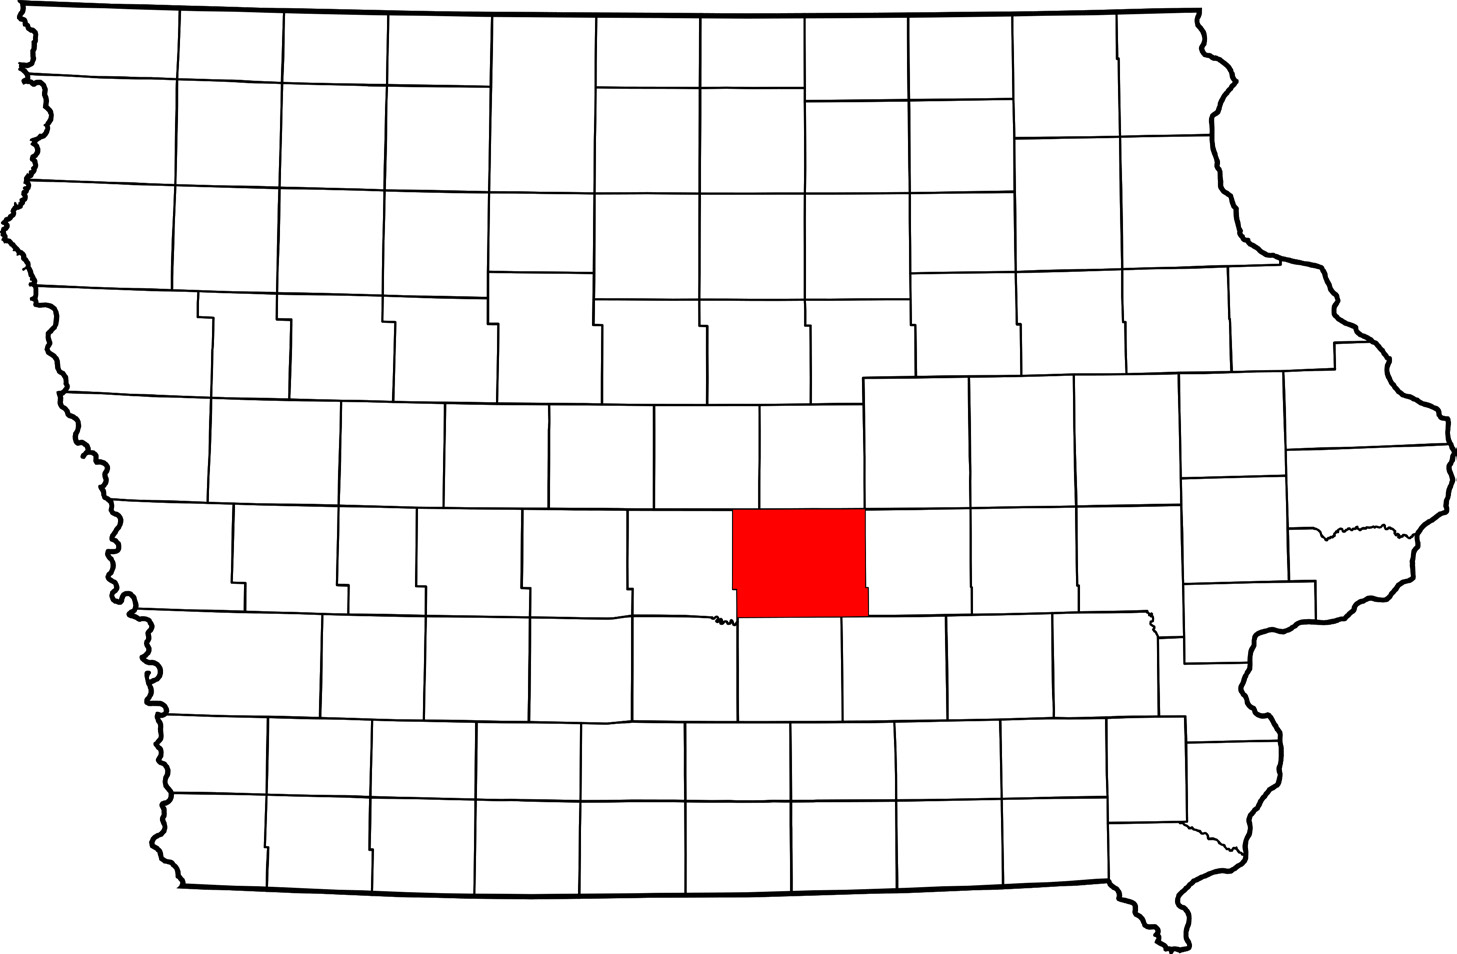 Kellogg is located in Jasper County, Iowa. Image courtesy of Wikimedia Commons.